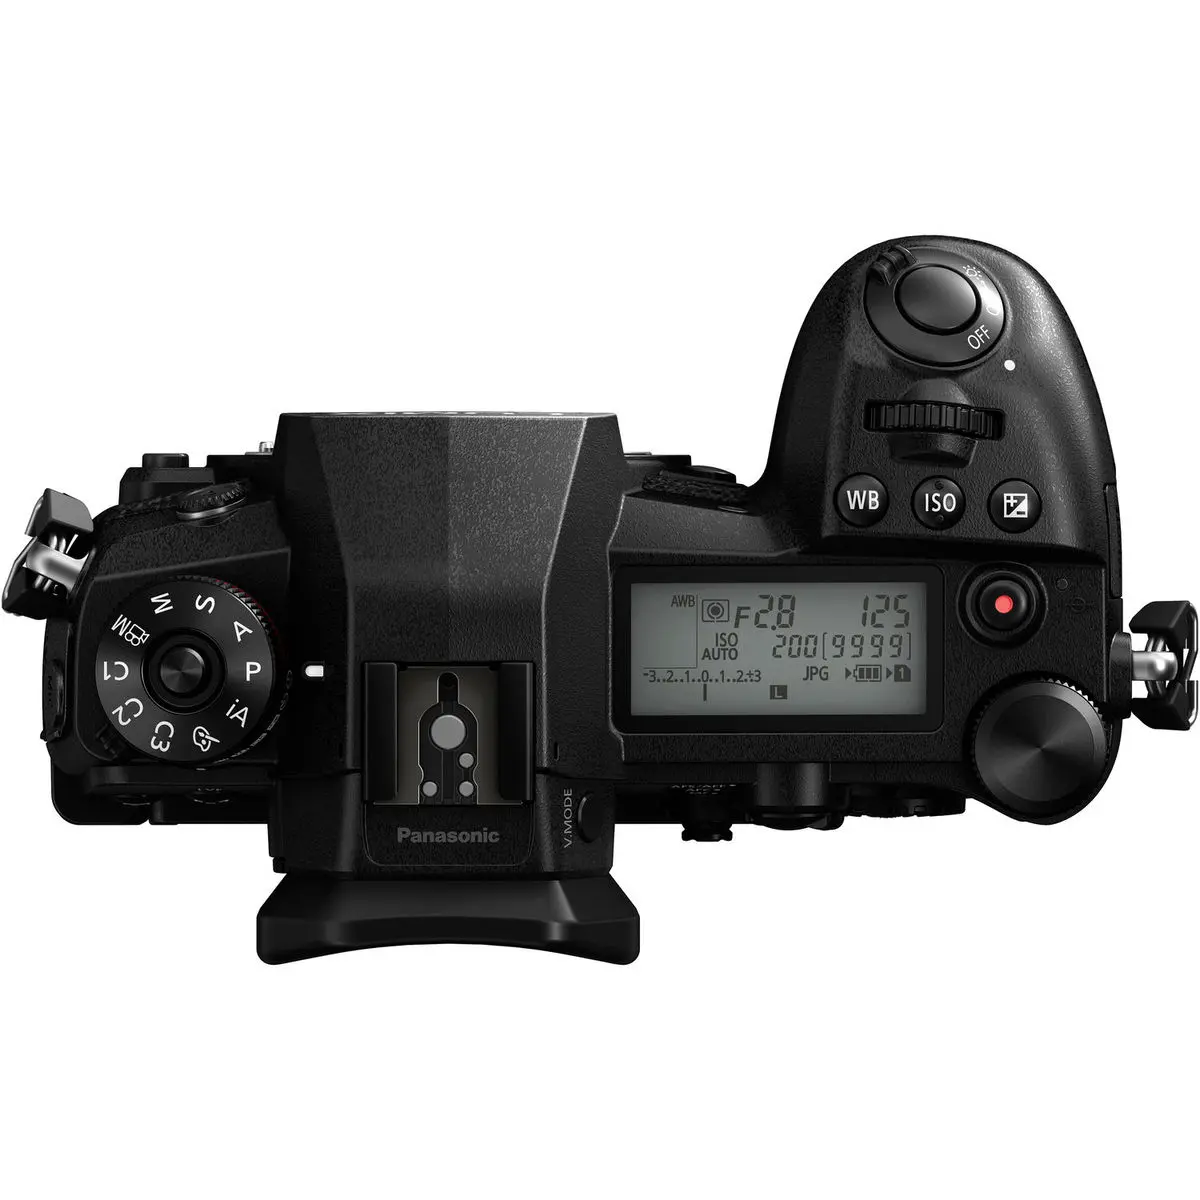 4. Panasonic Lumix DC-G9 Body Camera